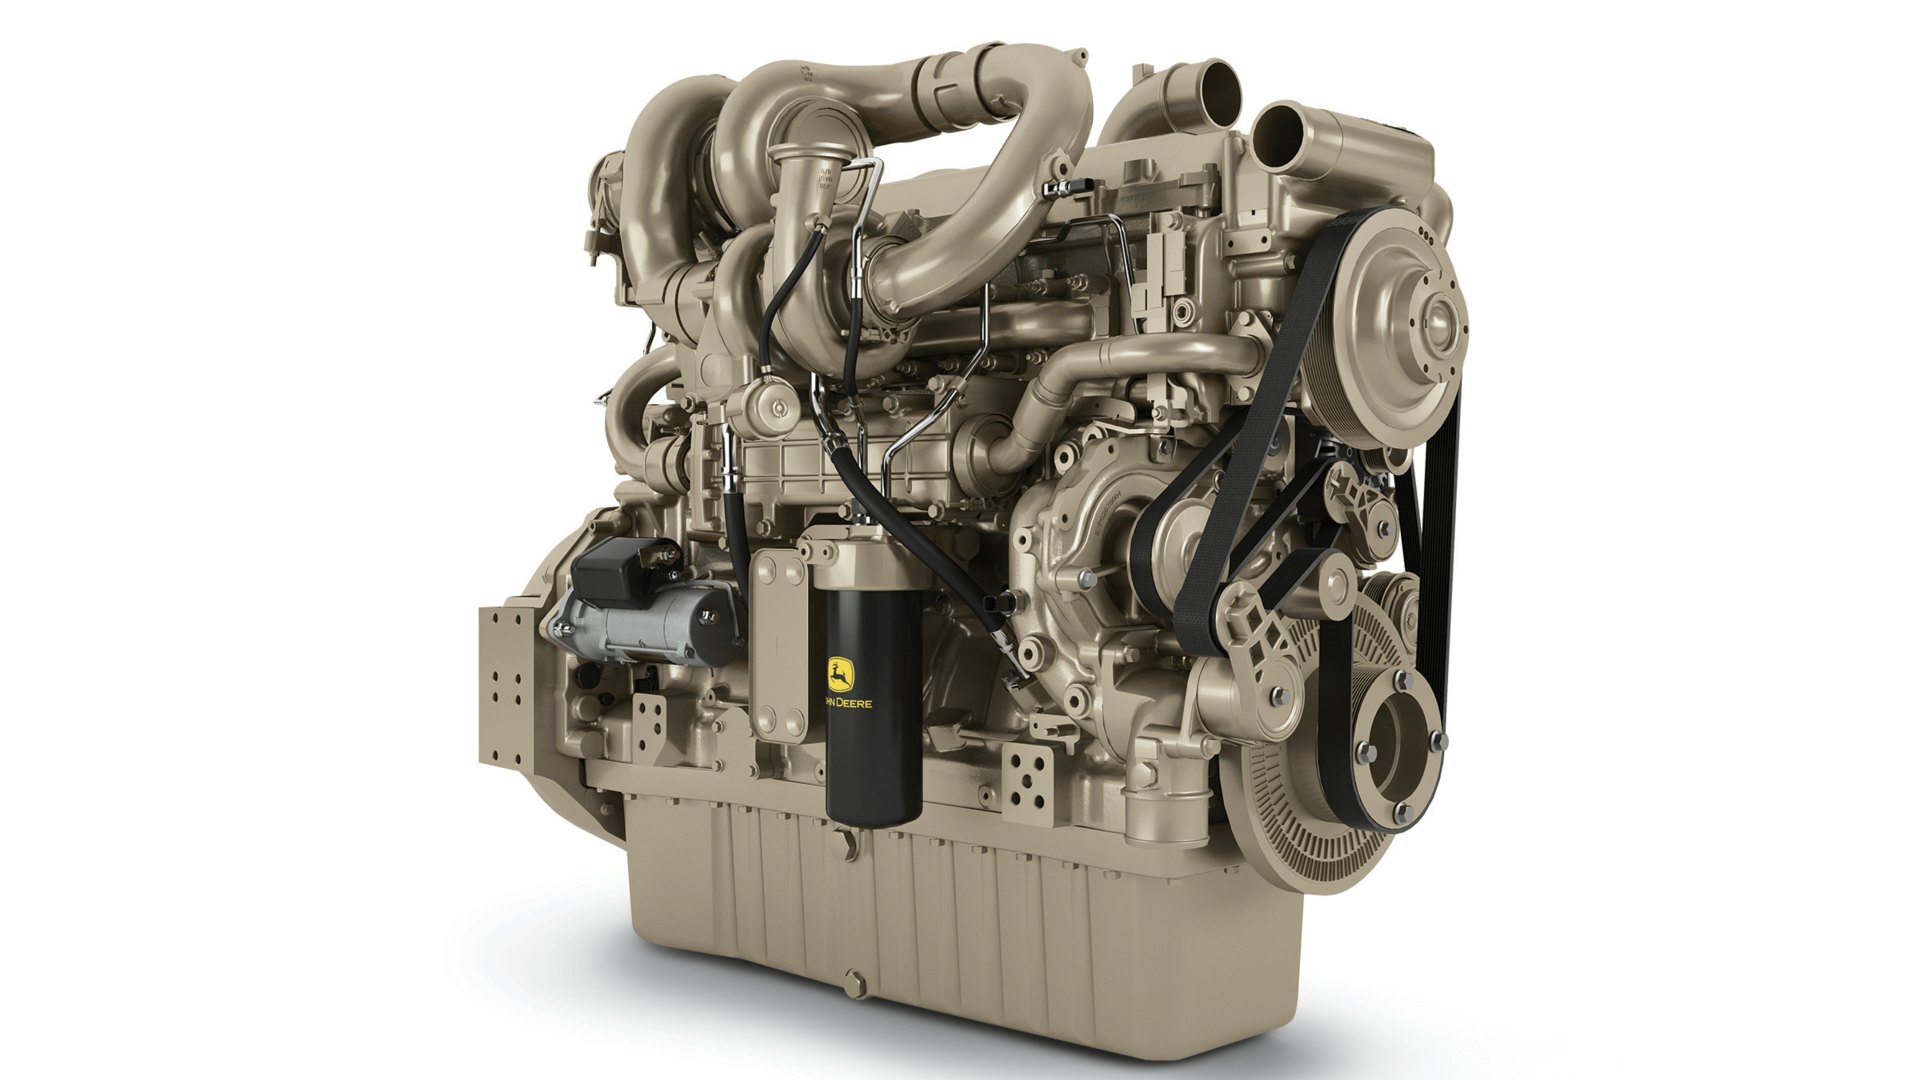 John Deere Power Systems 13.6 L Engine From: John Deere Power